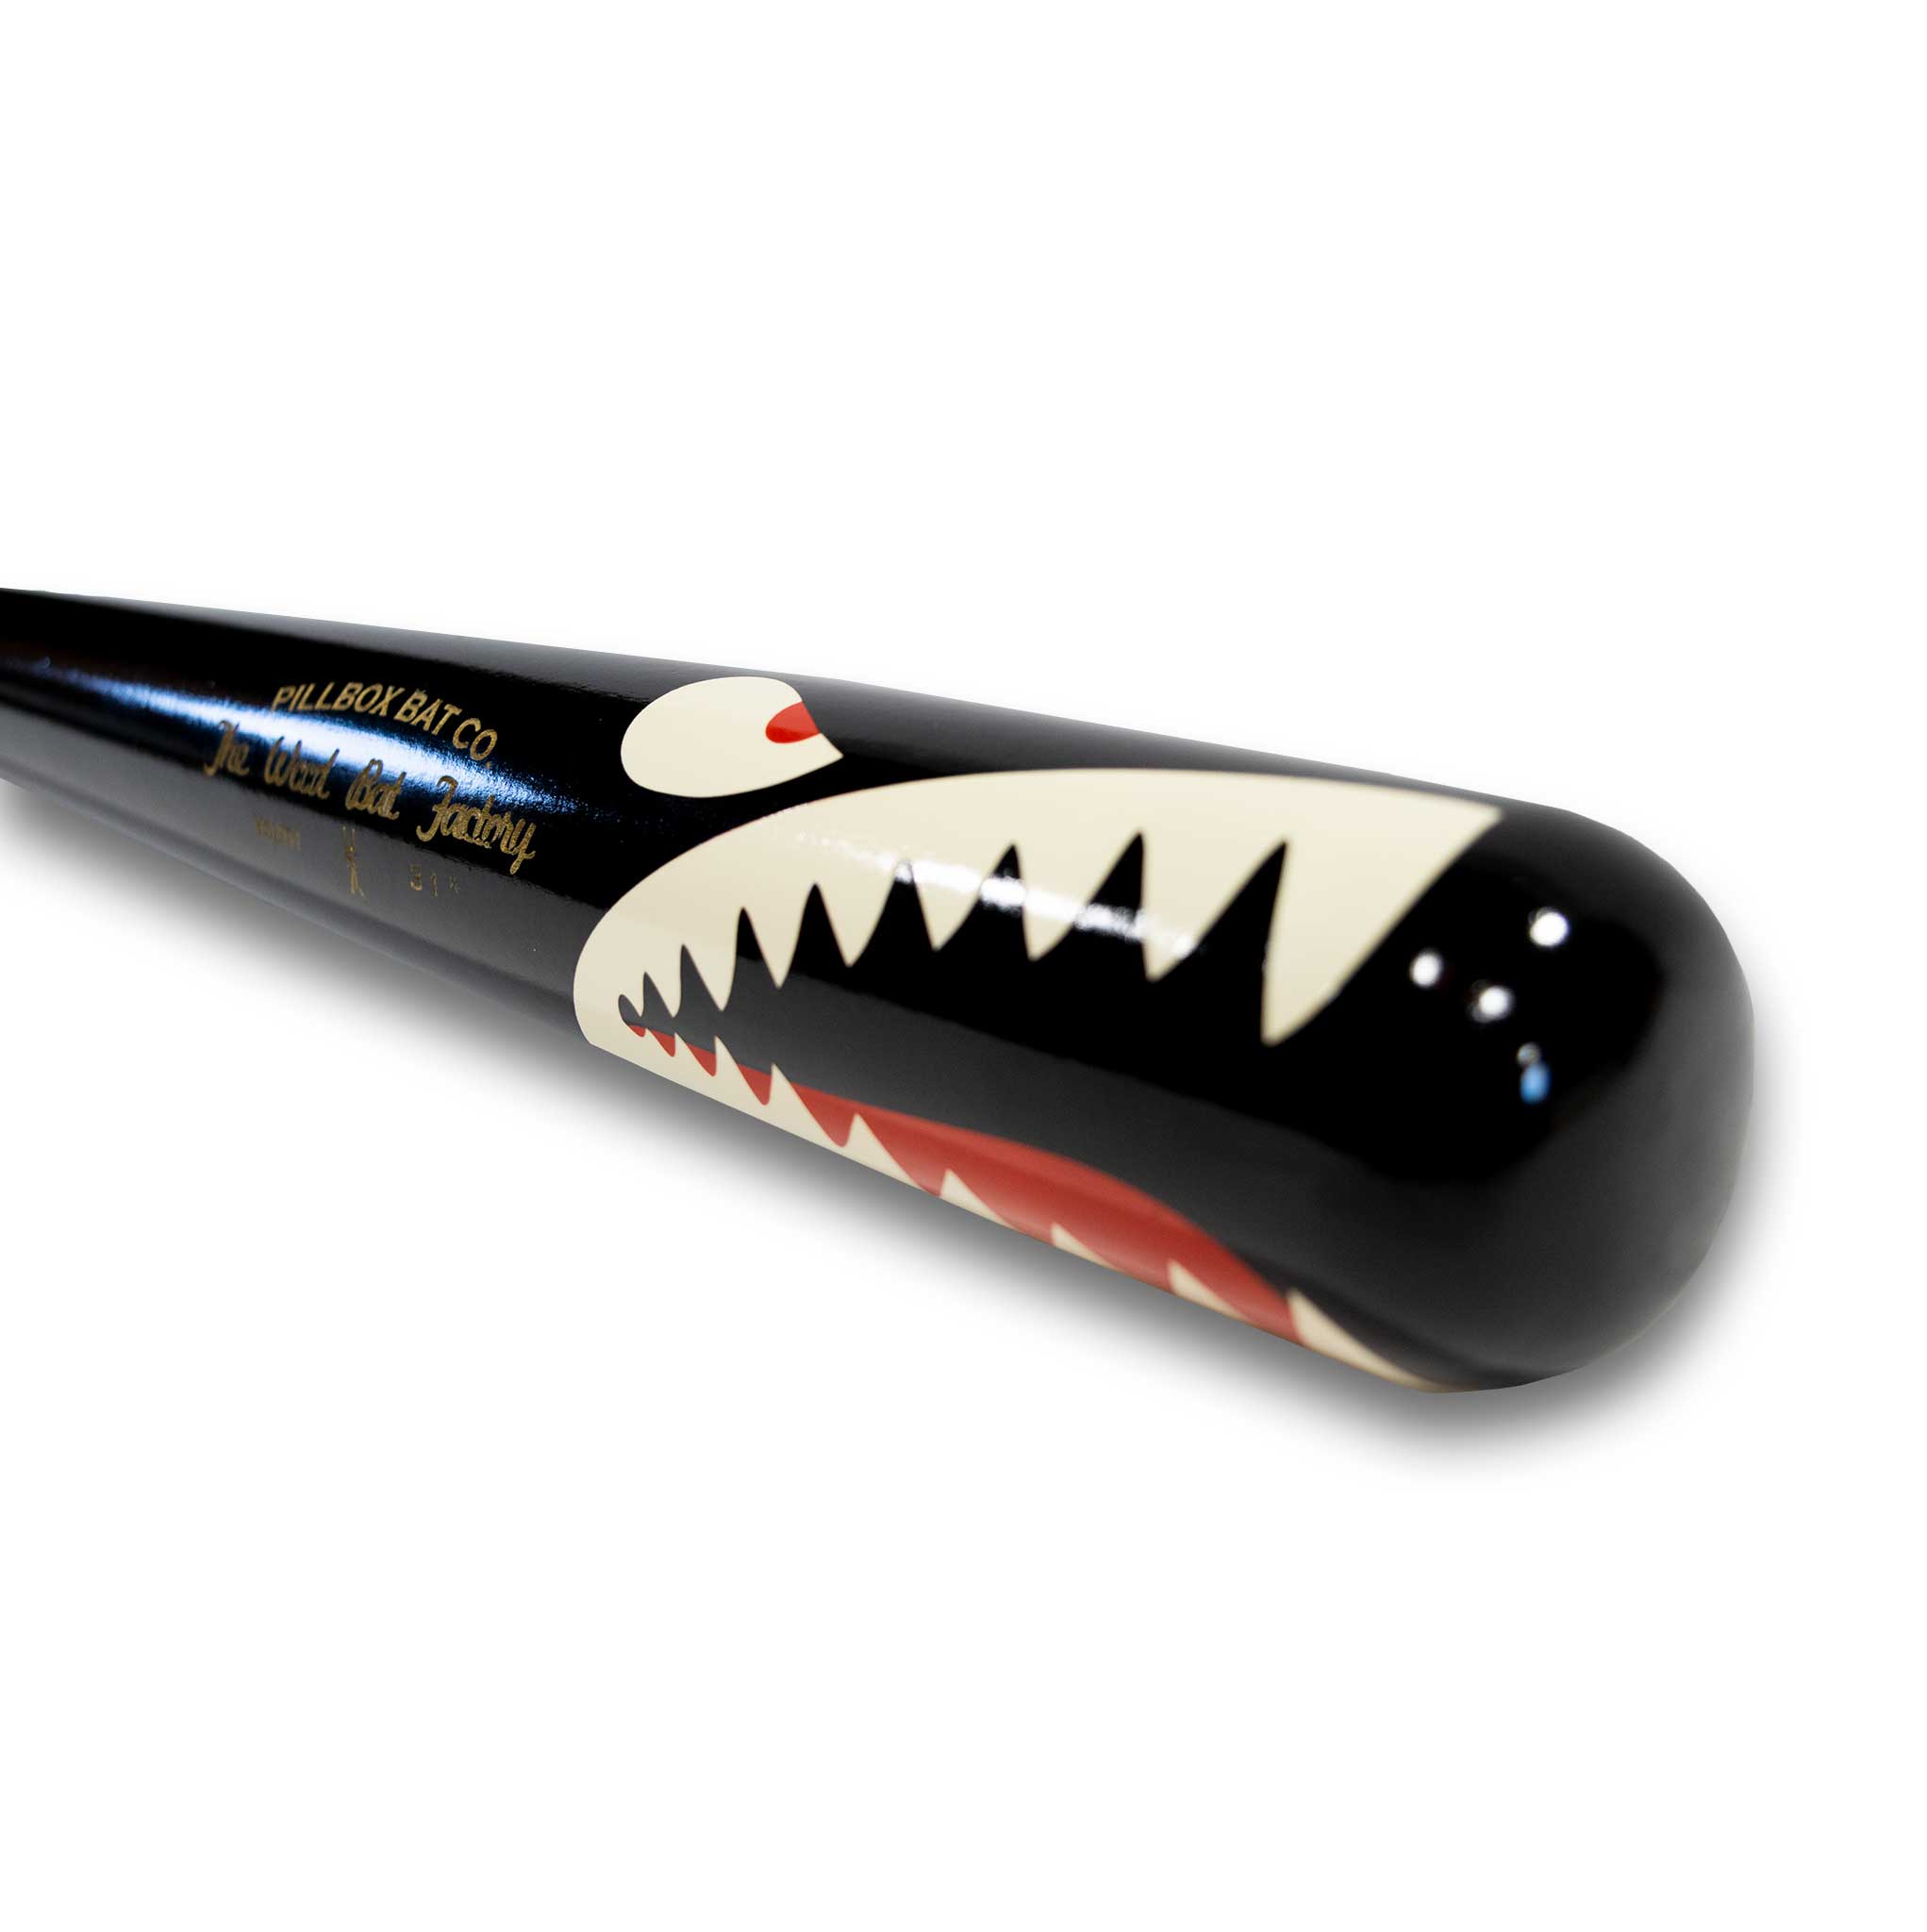 Pillbox Youth Shark Black (Bare Handle w/ White & Red Rings) Wood Baseball Bat | Maple | 29